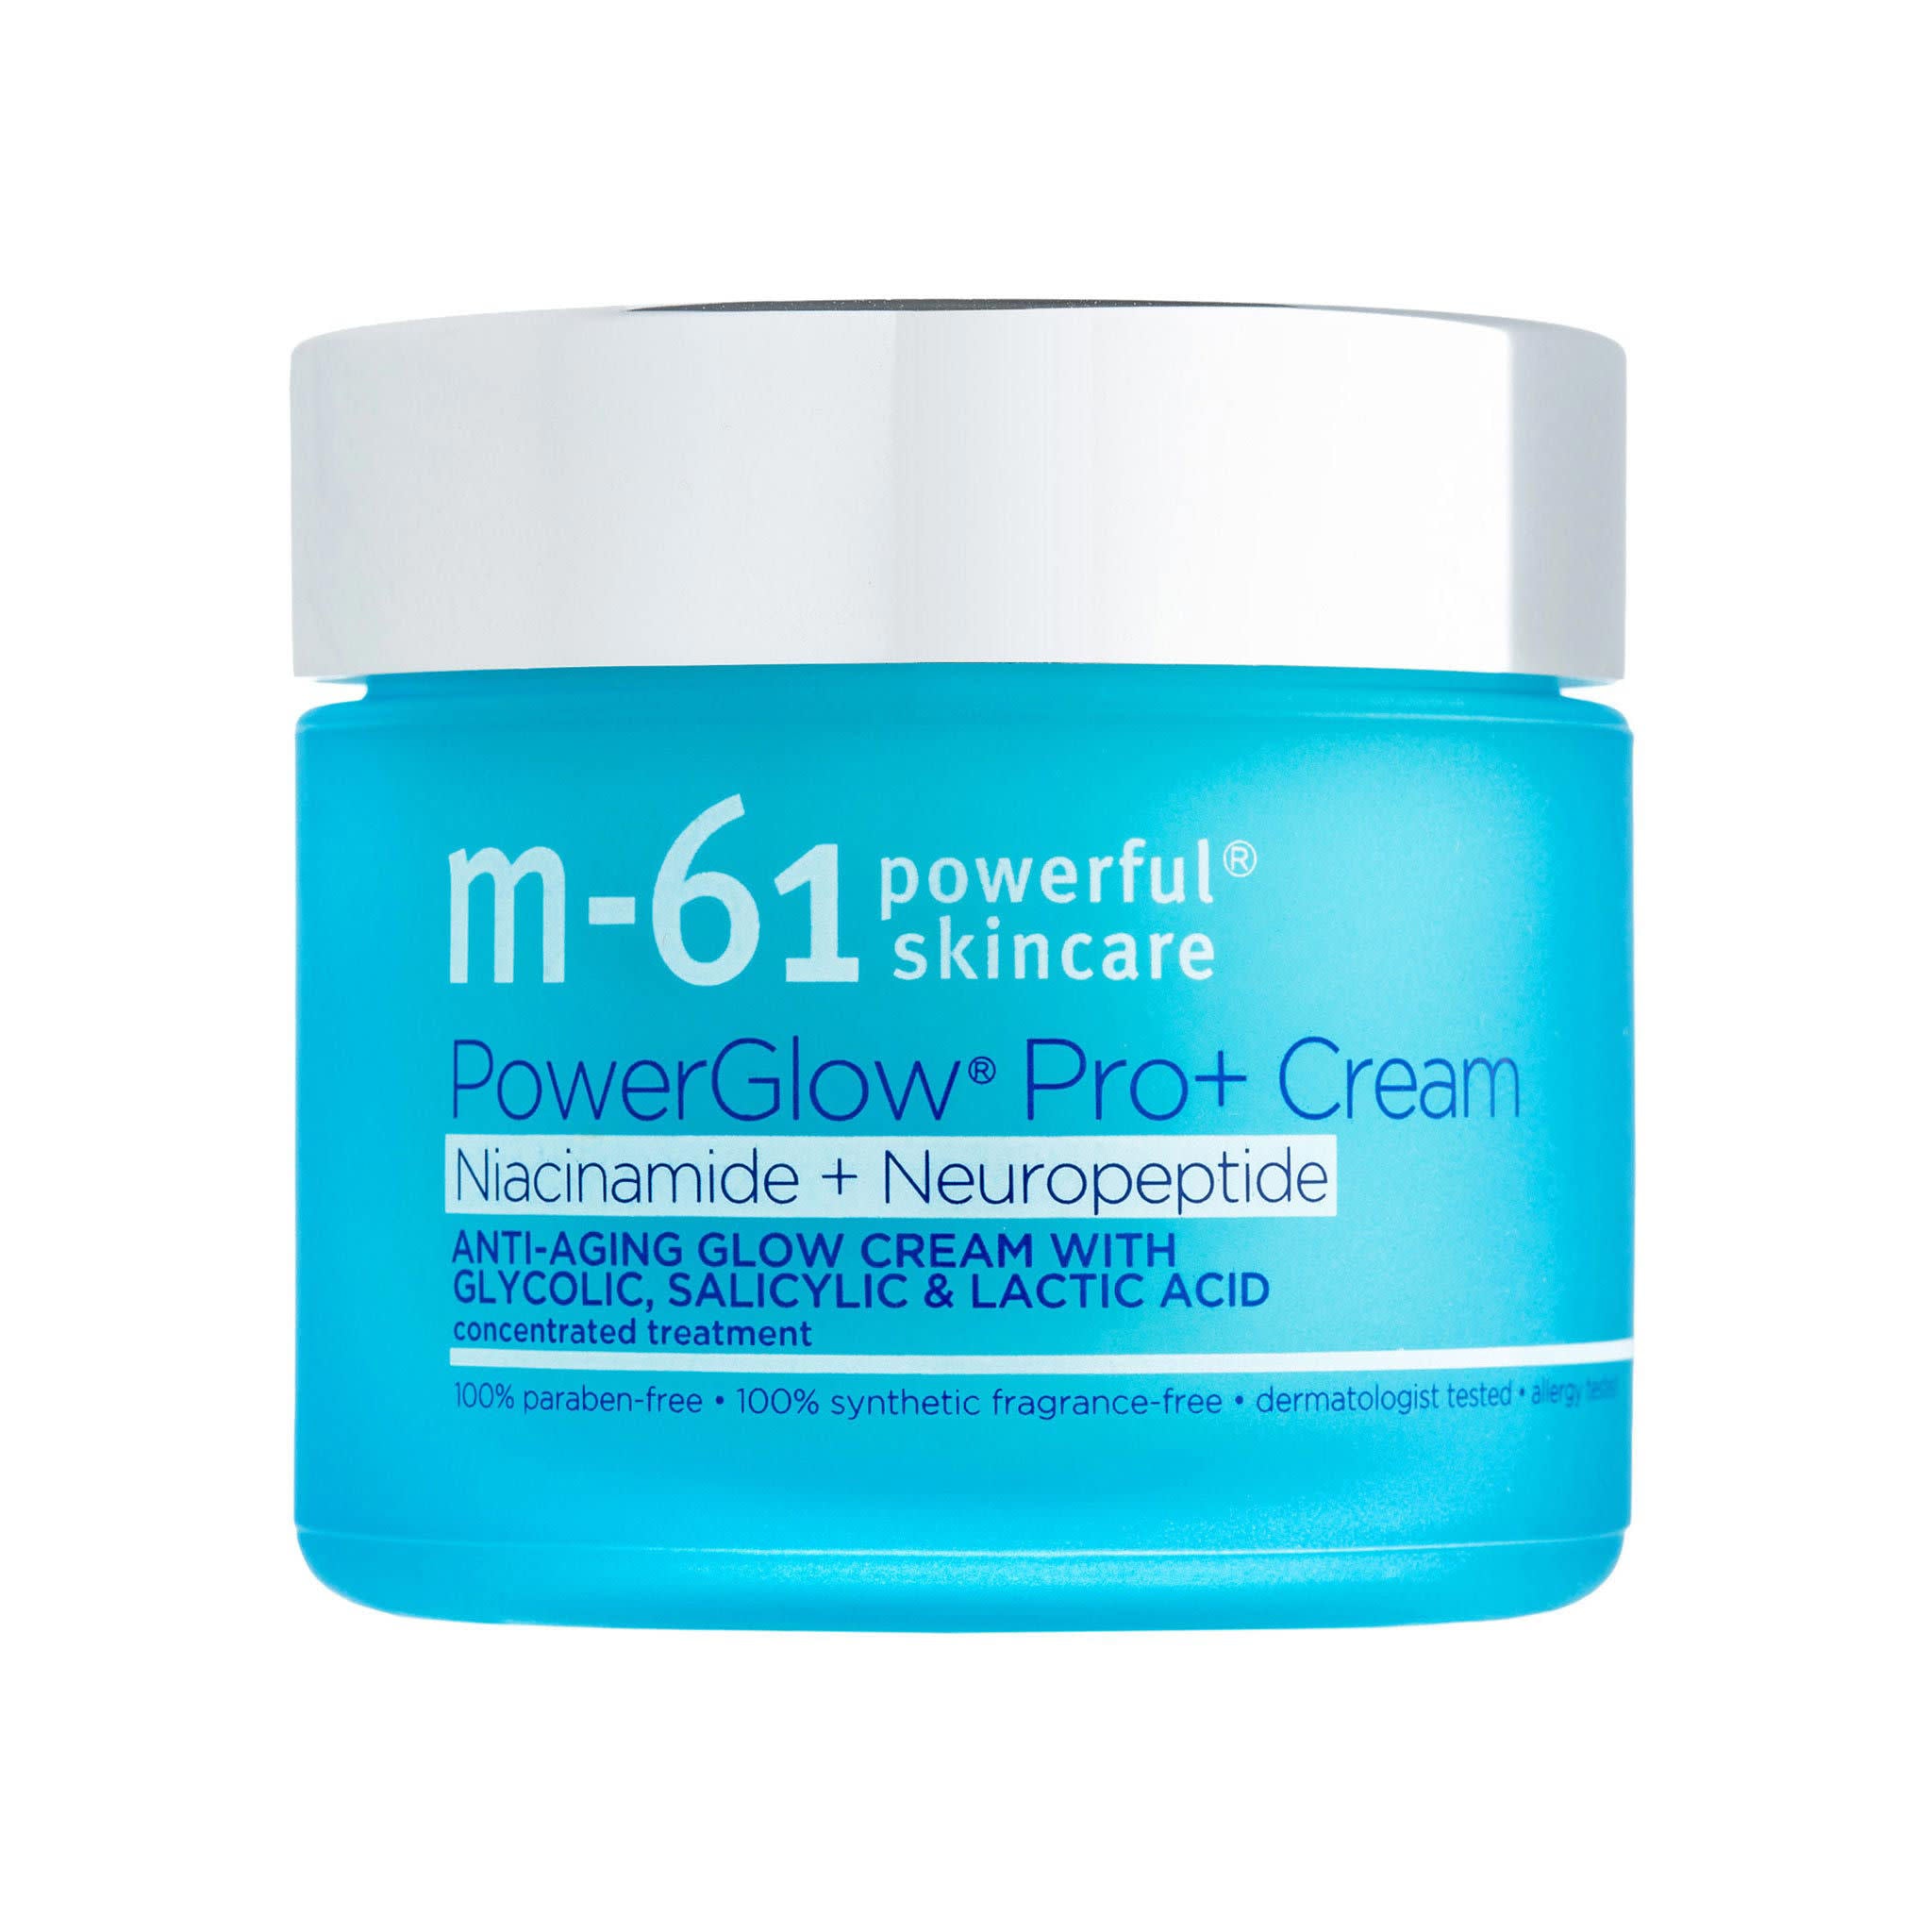 M-61 PowerGlow Pro+ Niacinamide+Neuropeptide Cream main image.